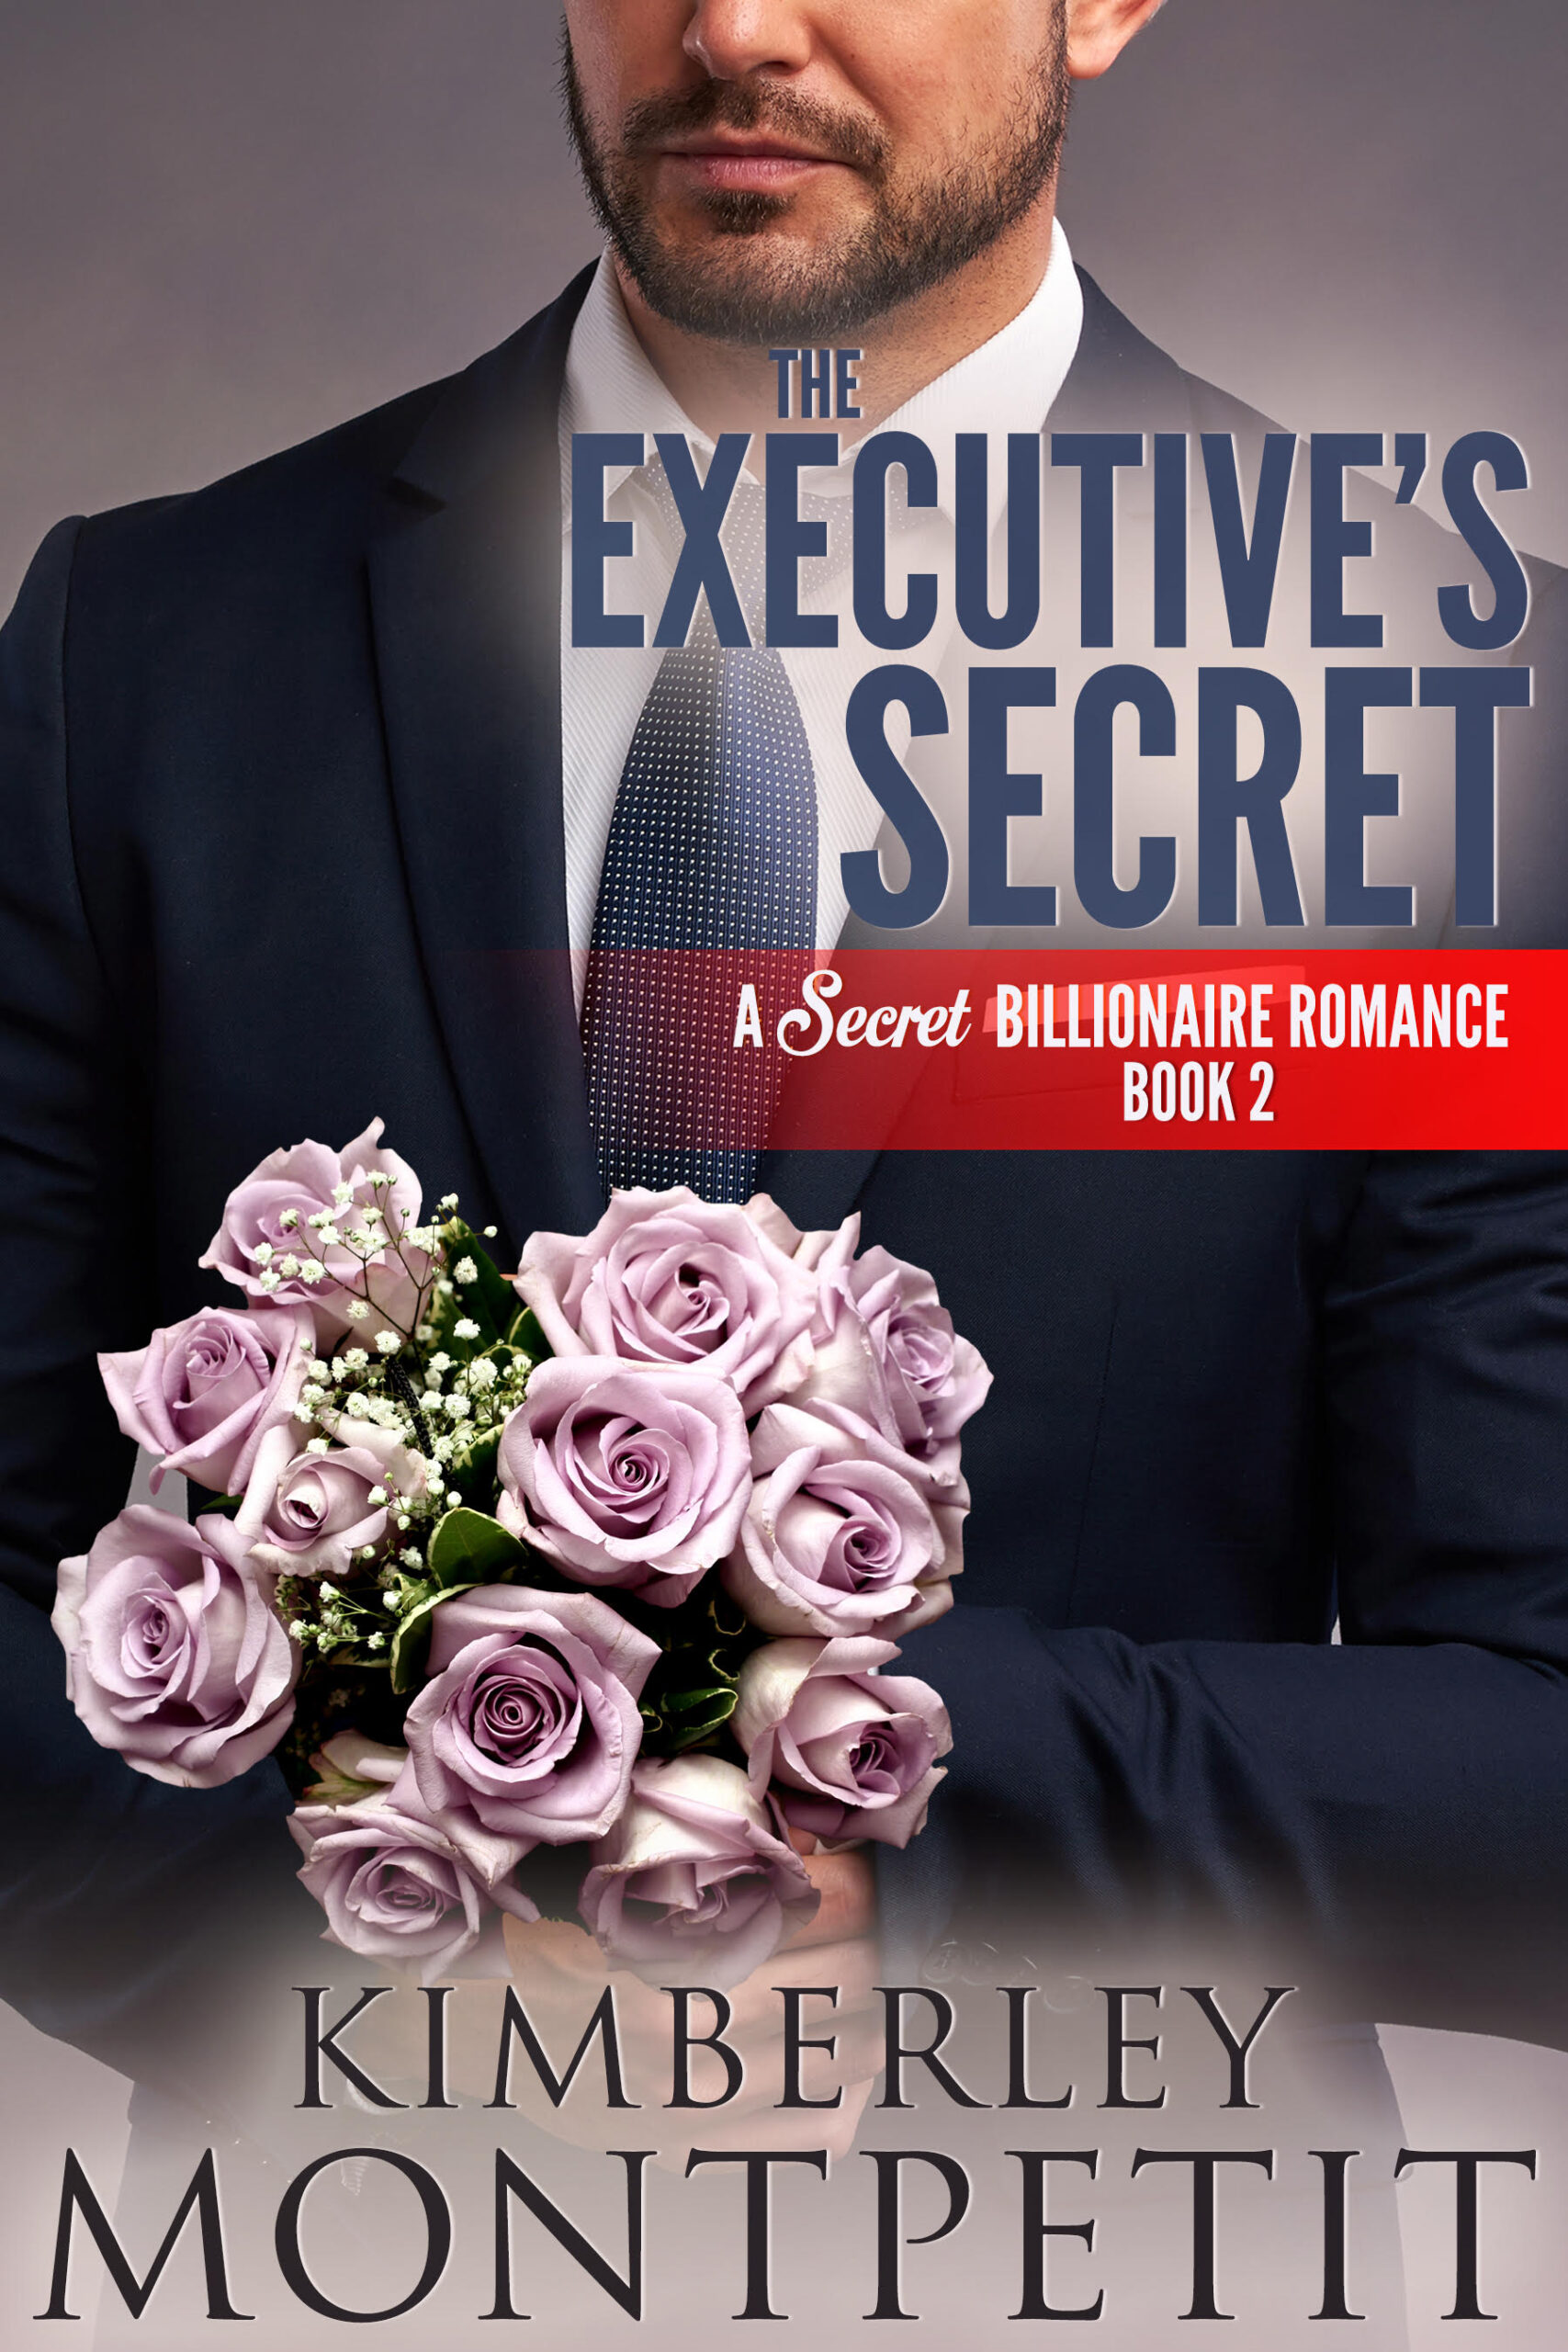 The Executive's Secret